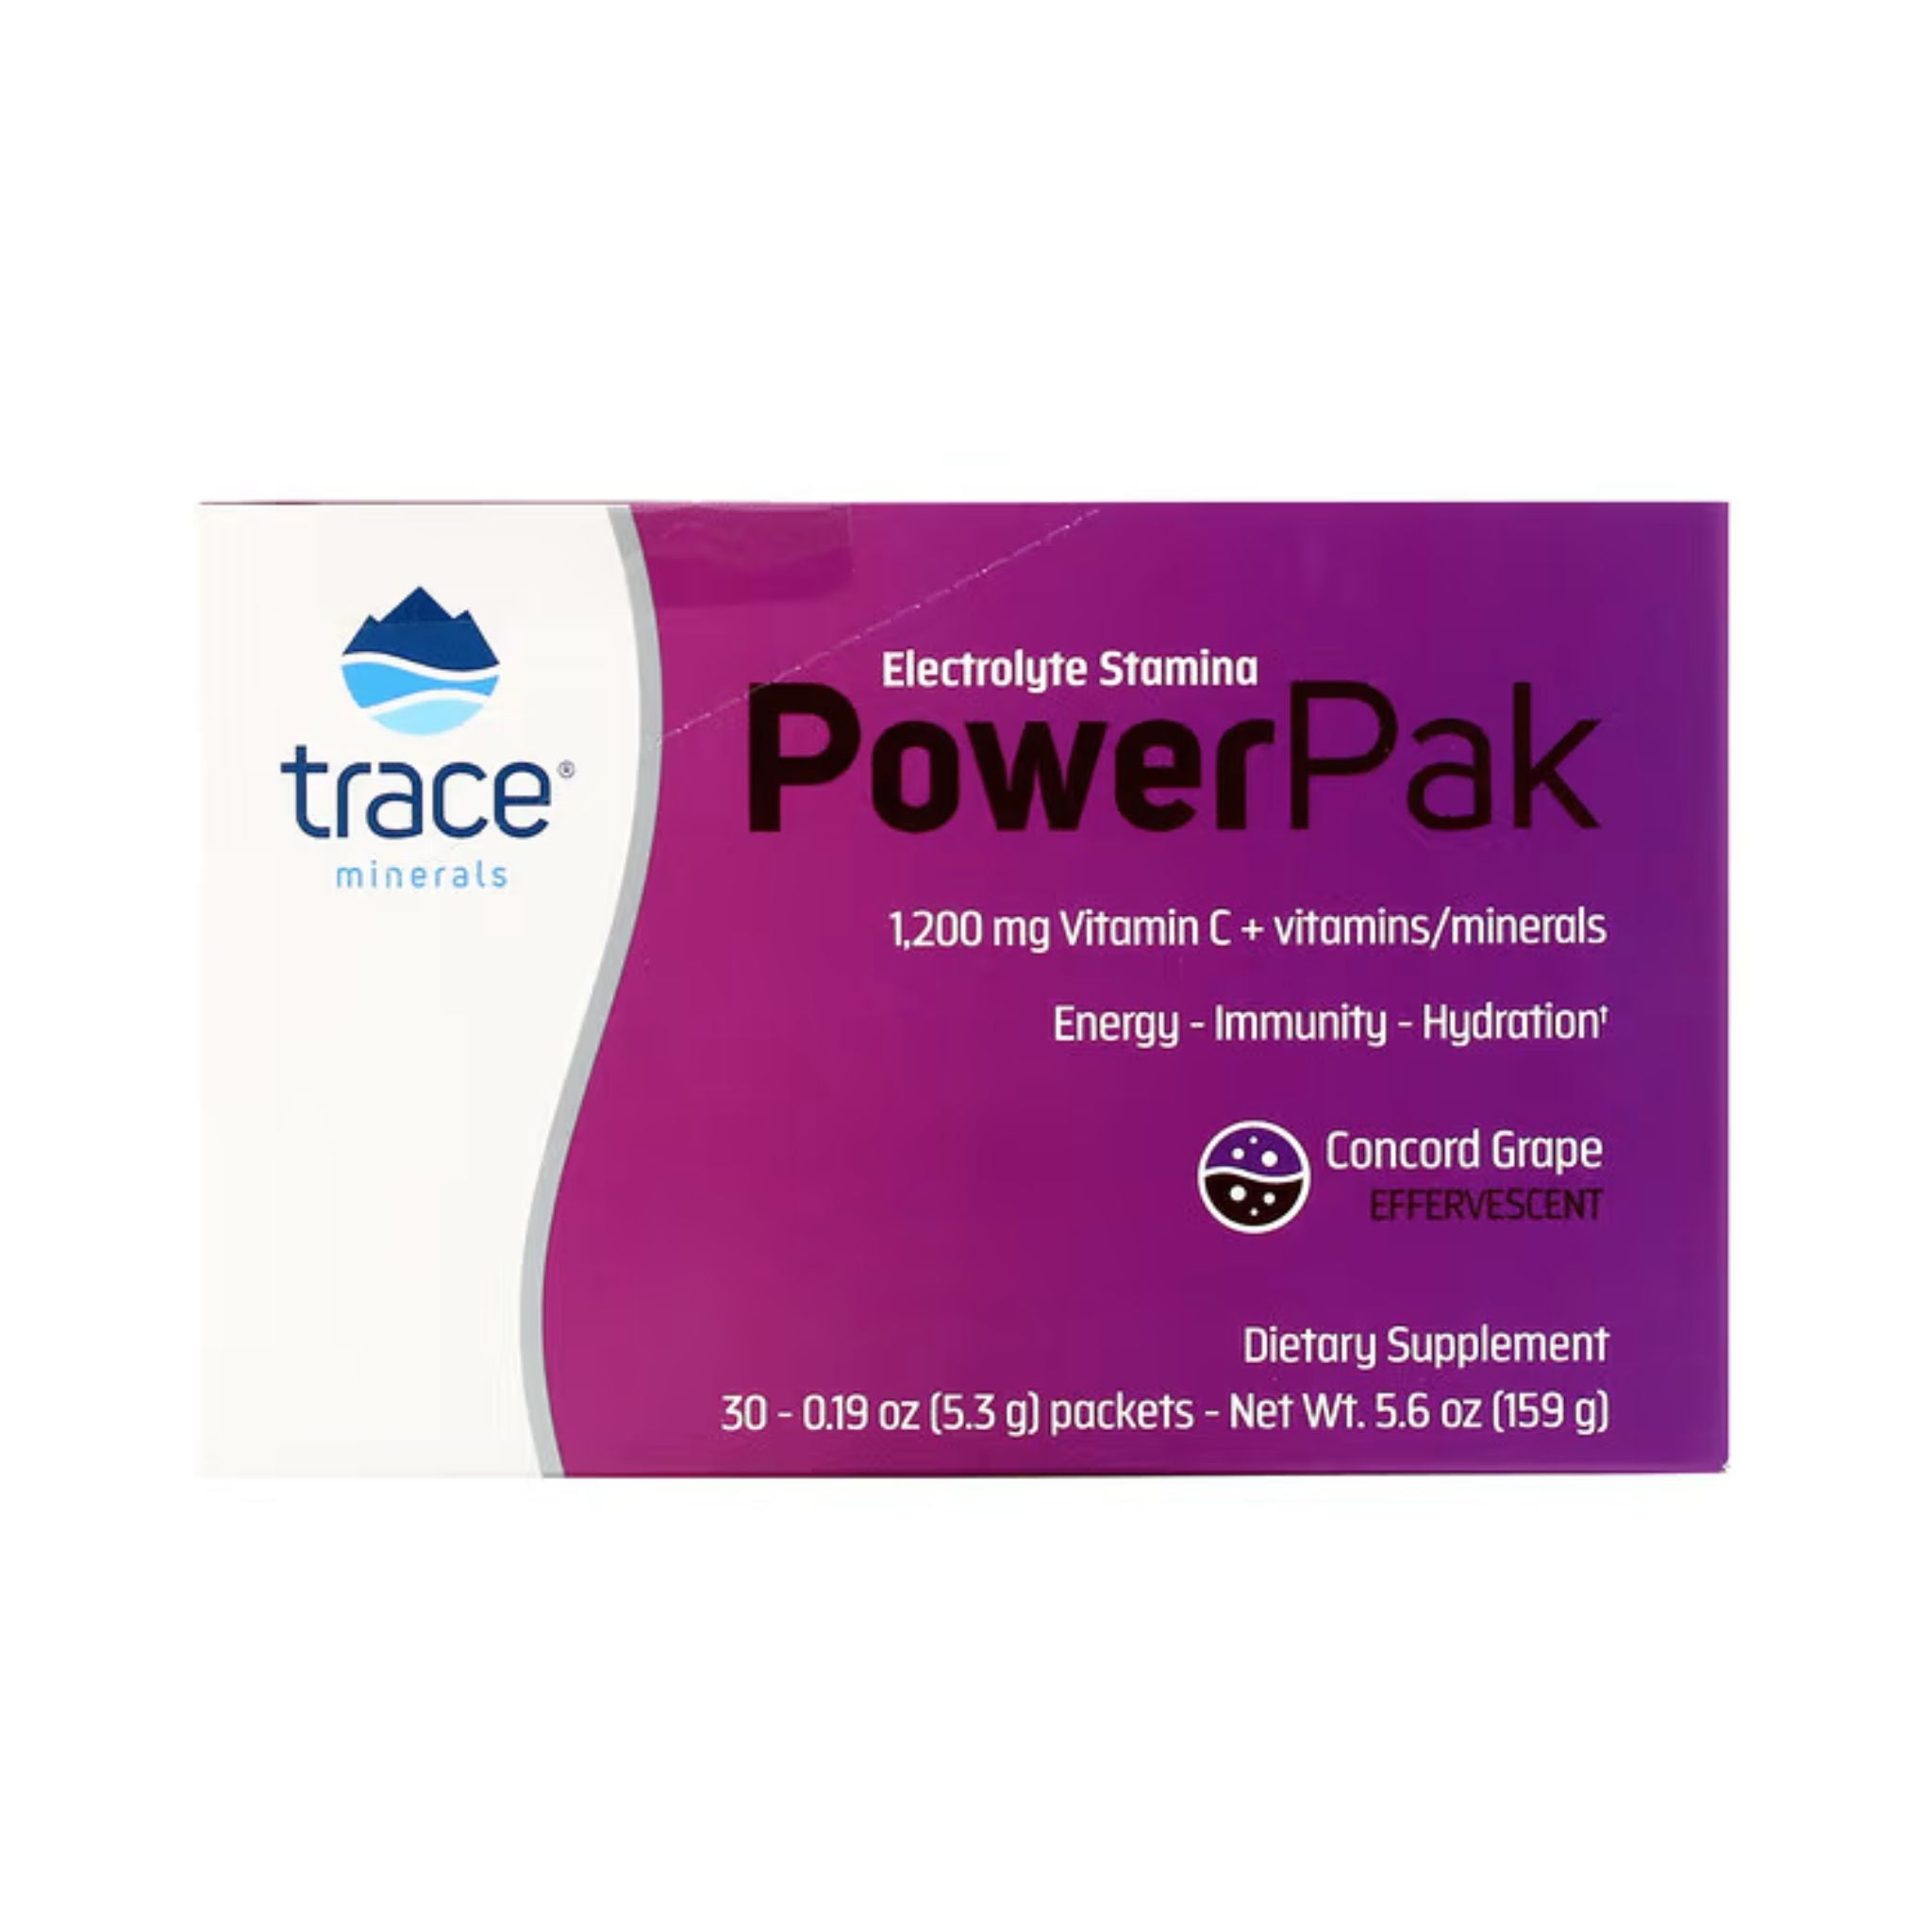 Electrolyte Stamina PowerPak